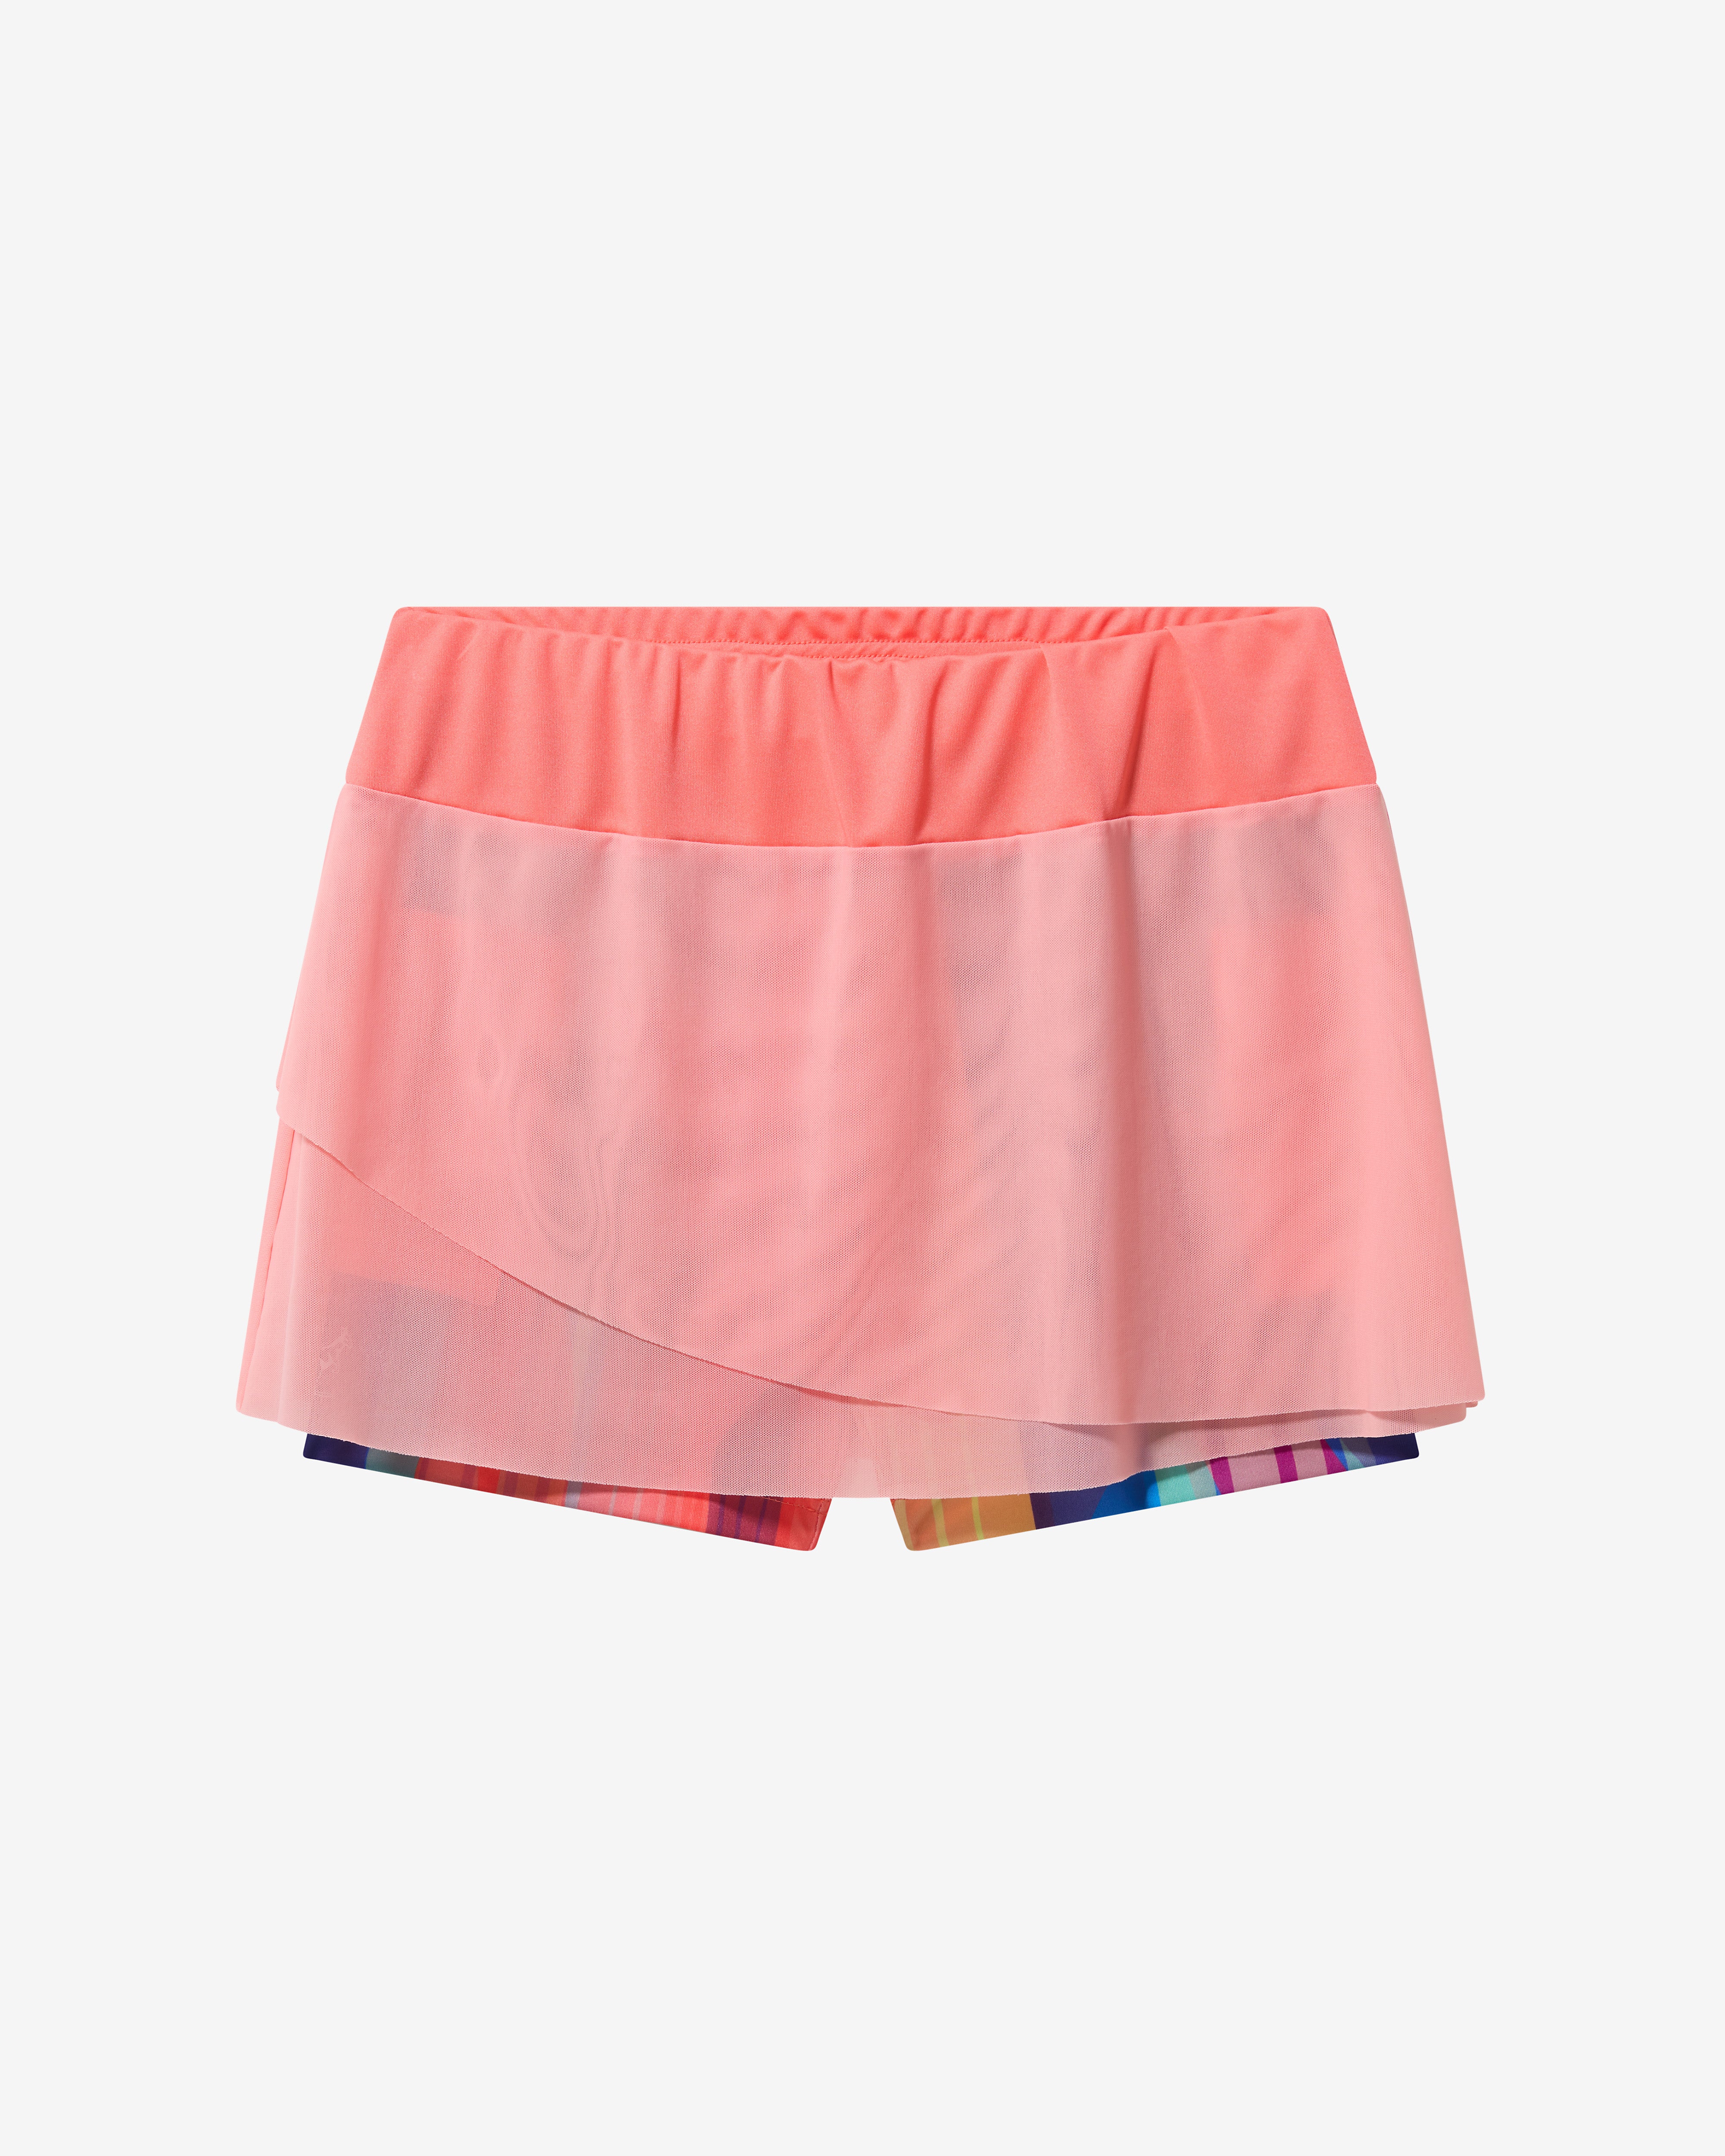 Sunset Decò Skirt: Australian Tennis